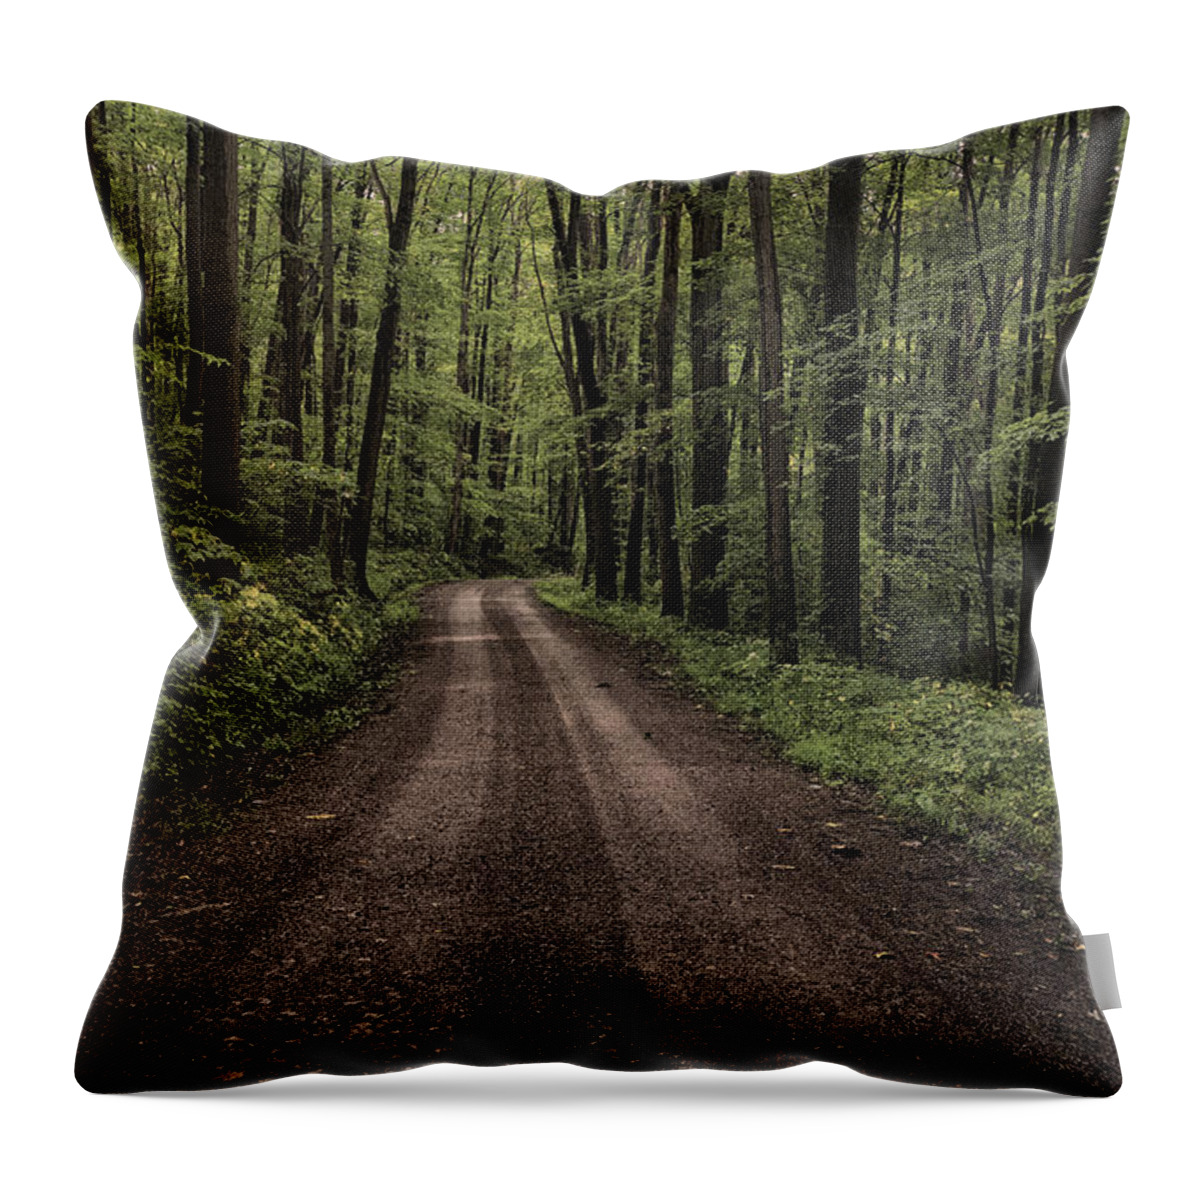 Pennsylvania Throw Pillow featuring the photograph Back Road by Robert Fawcett